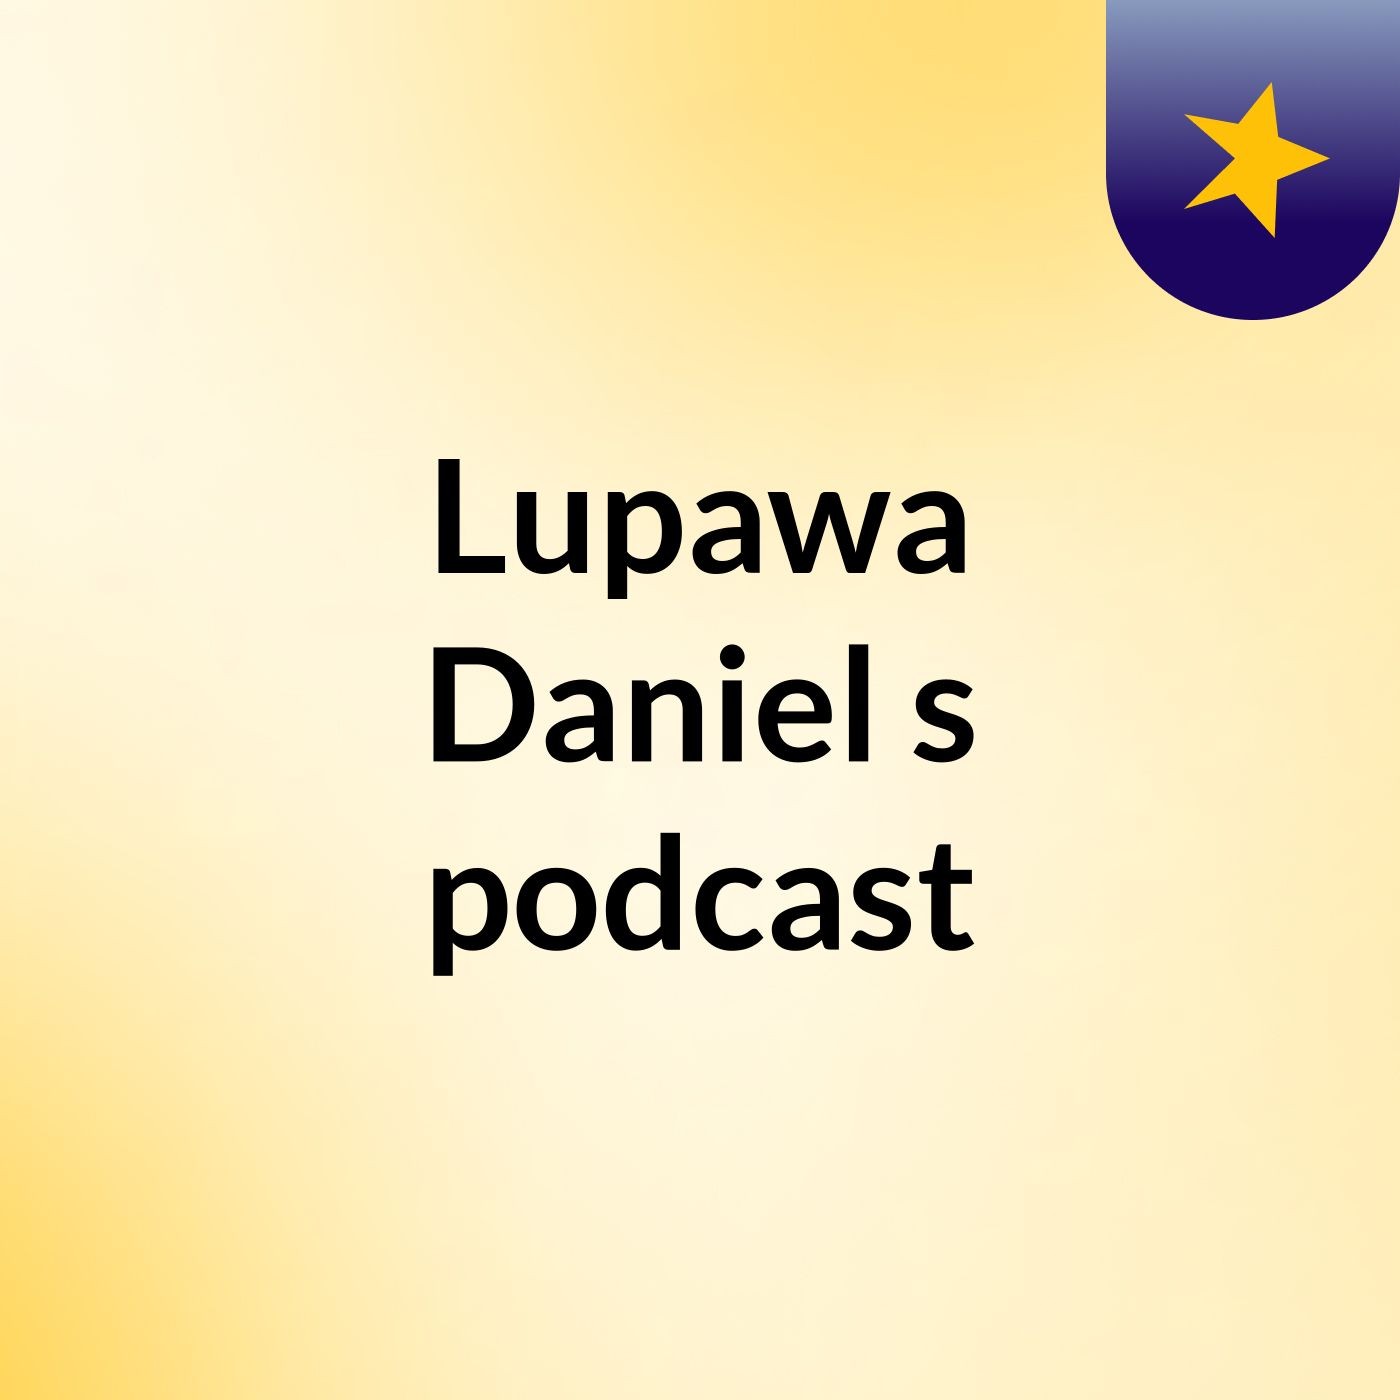 Episode 9 - Lupawa Daniel's podcast